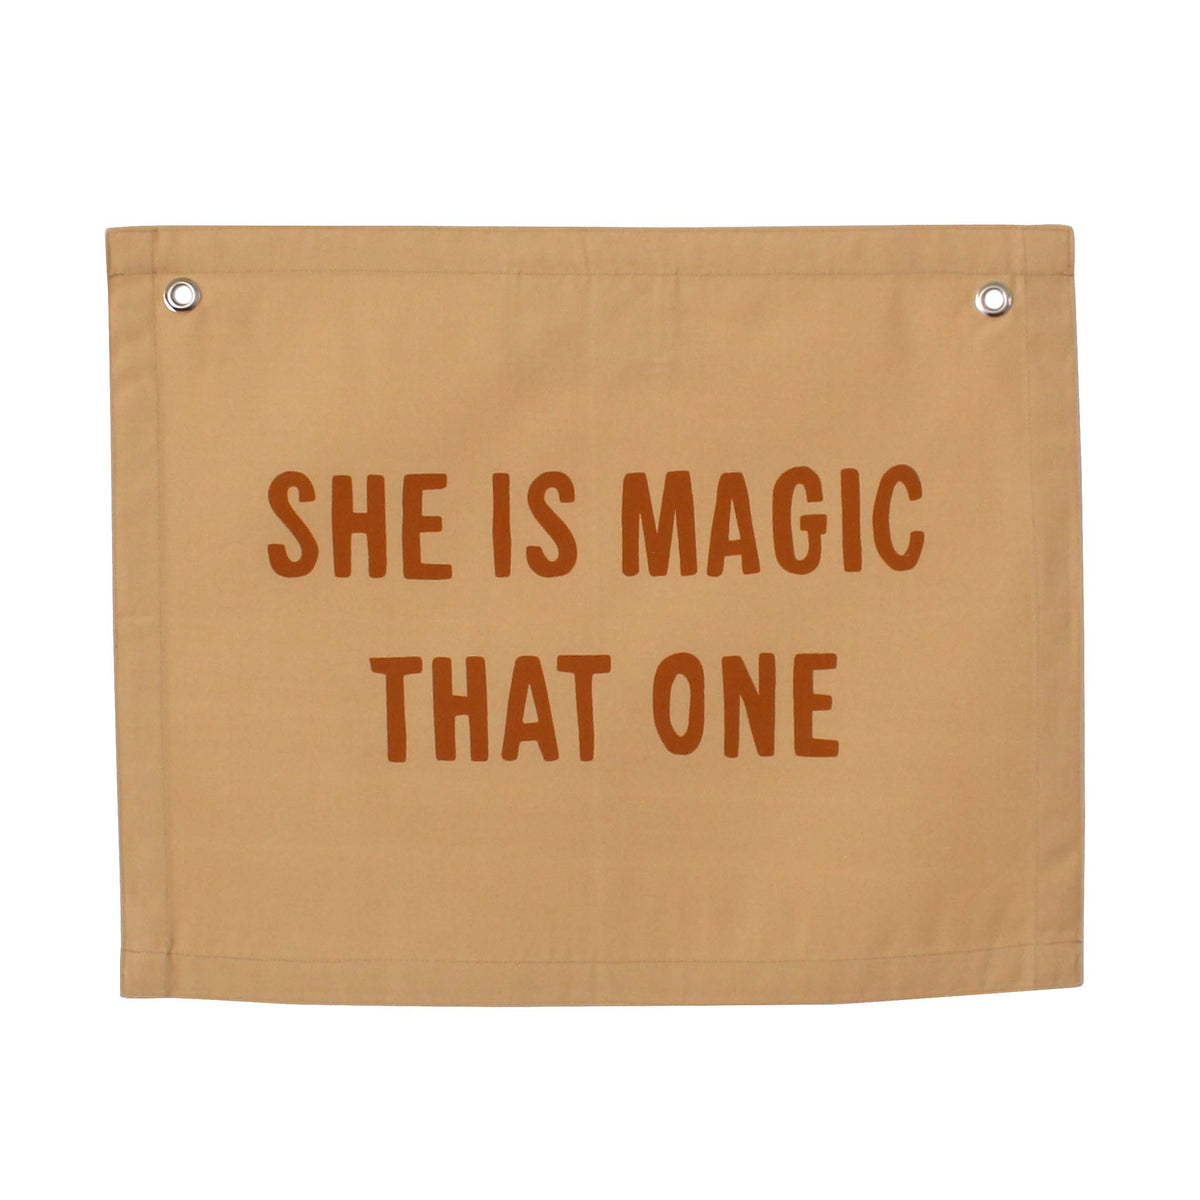 she is magic banner - sample sale